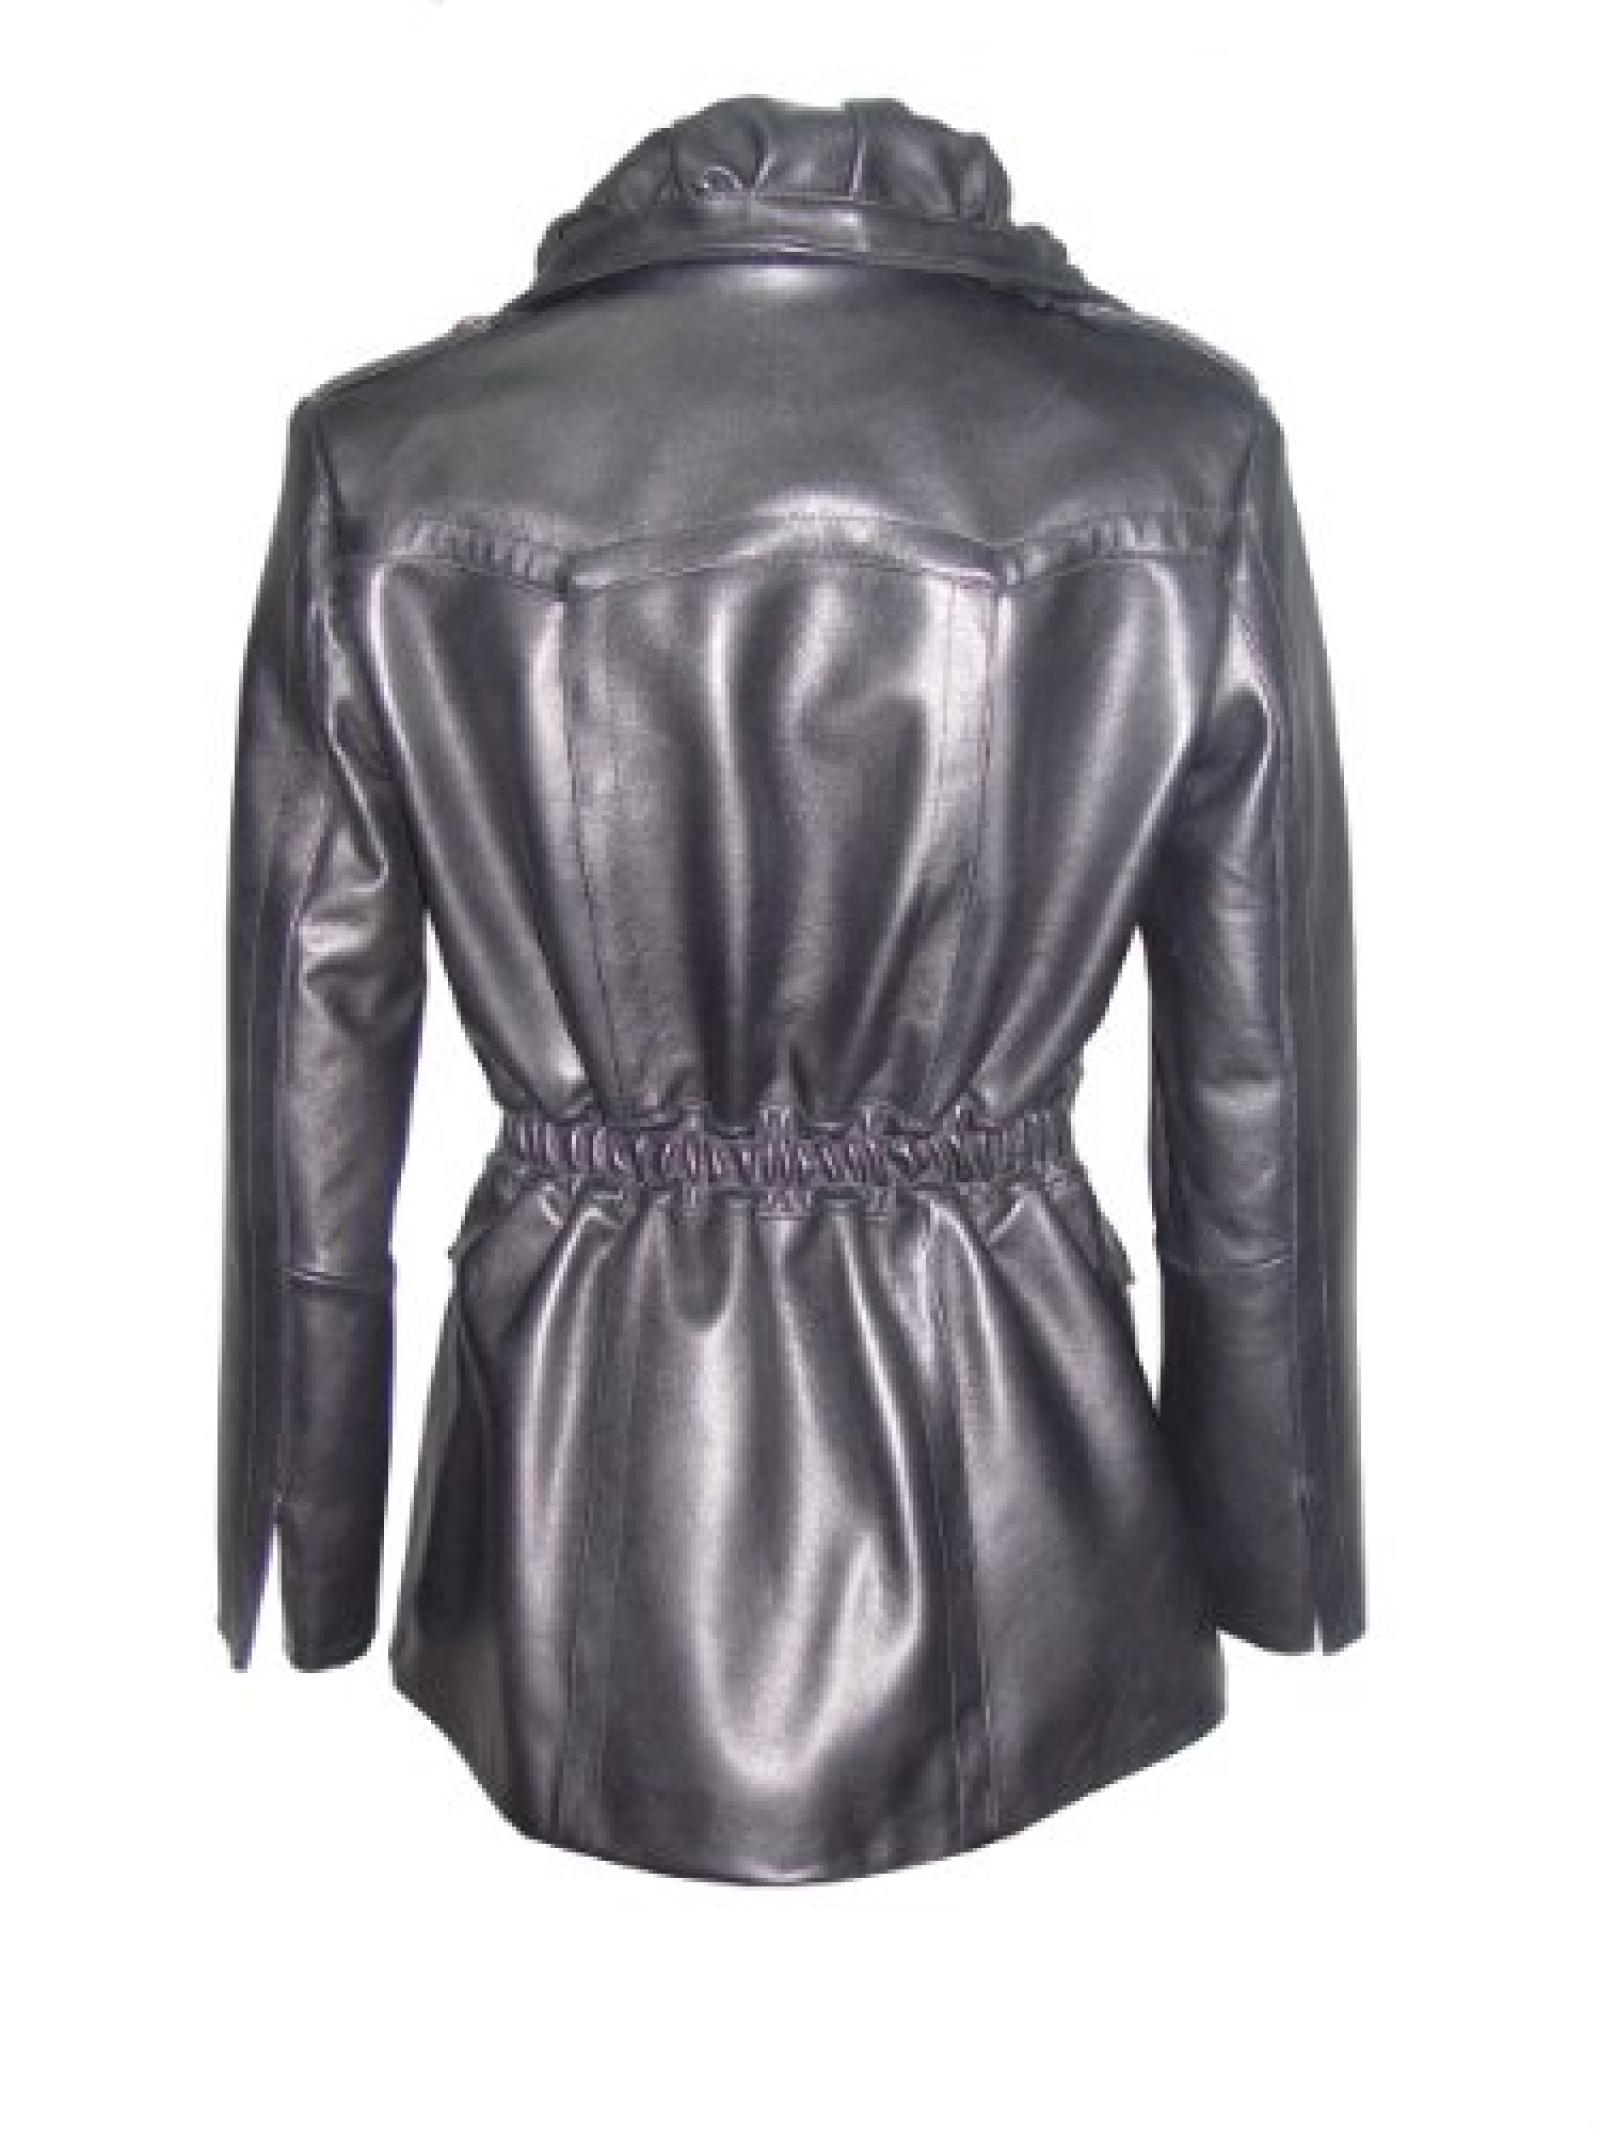 Nettailor Women PETITE SZ 4185 Soft Leather Simple Easy Casual Long Jacket 